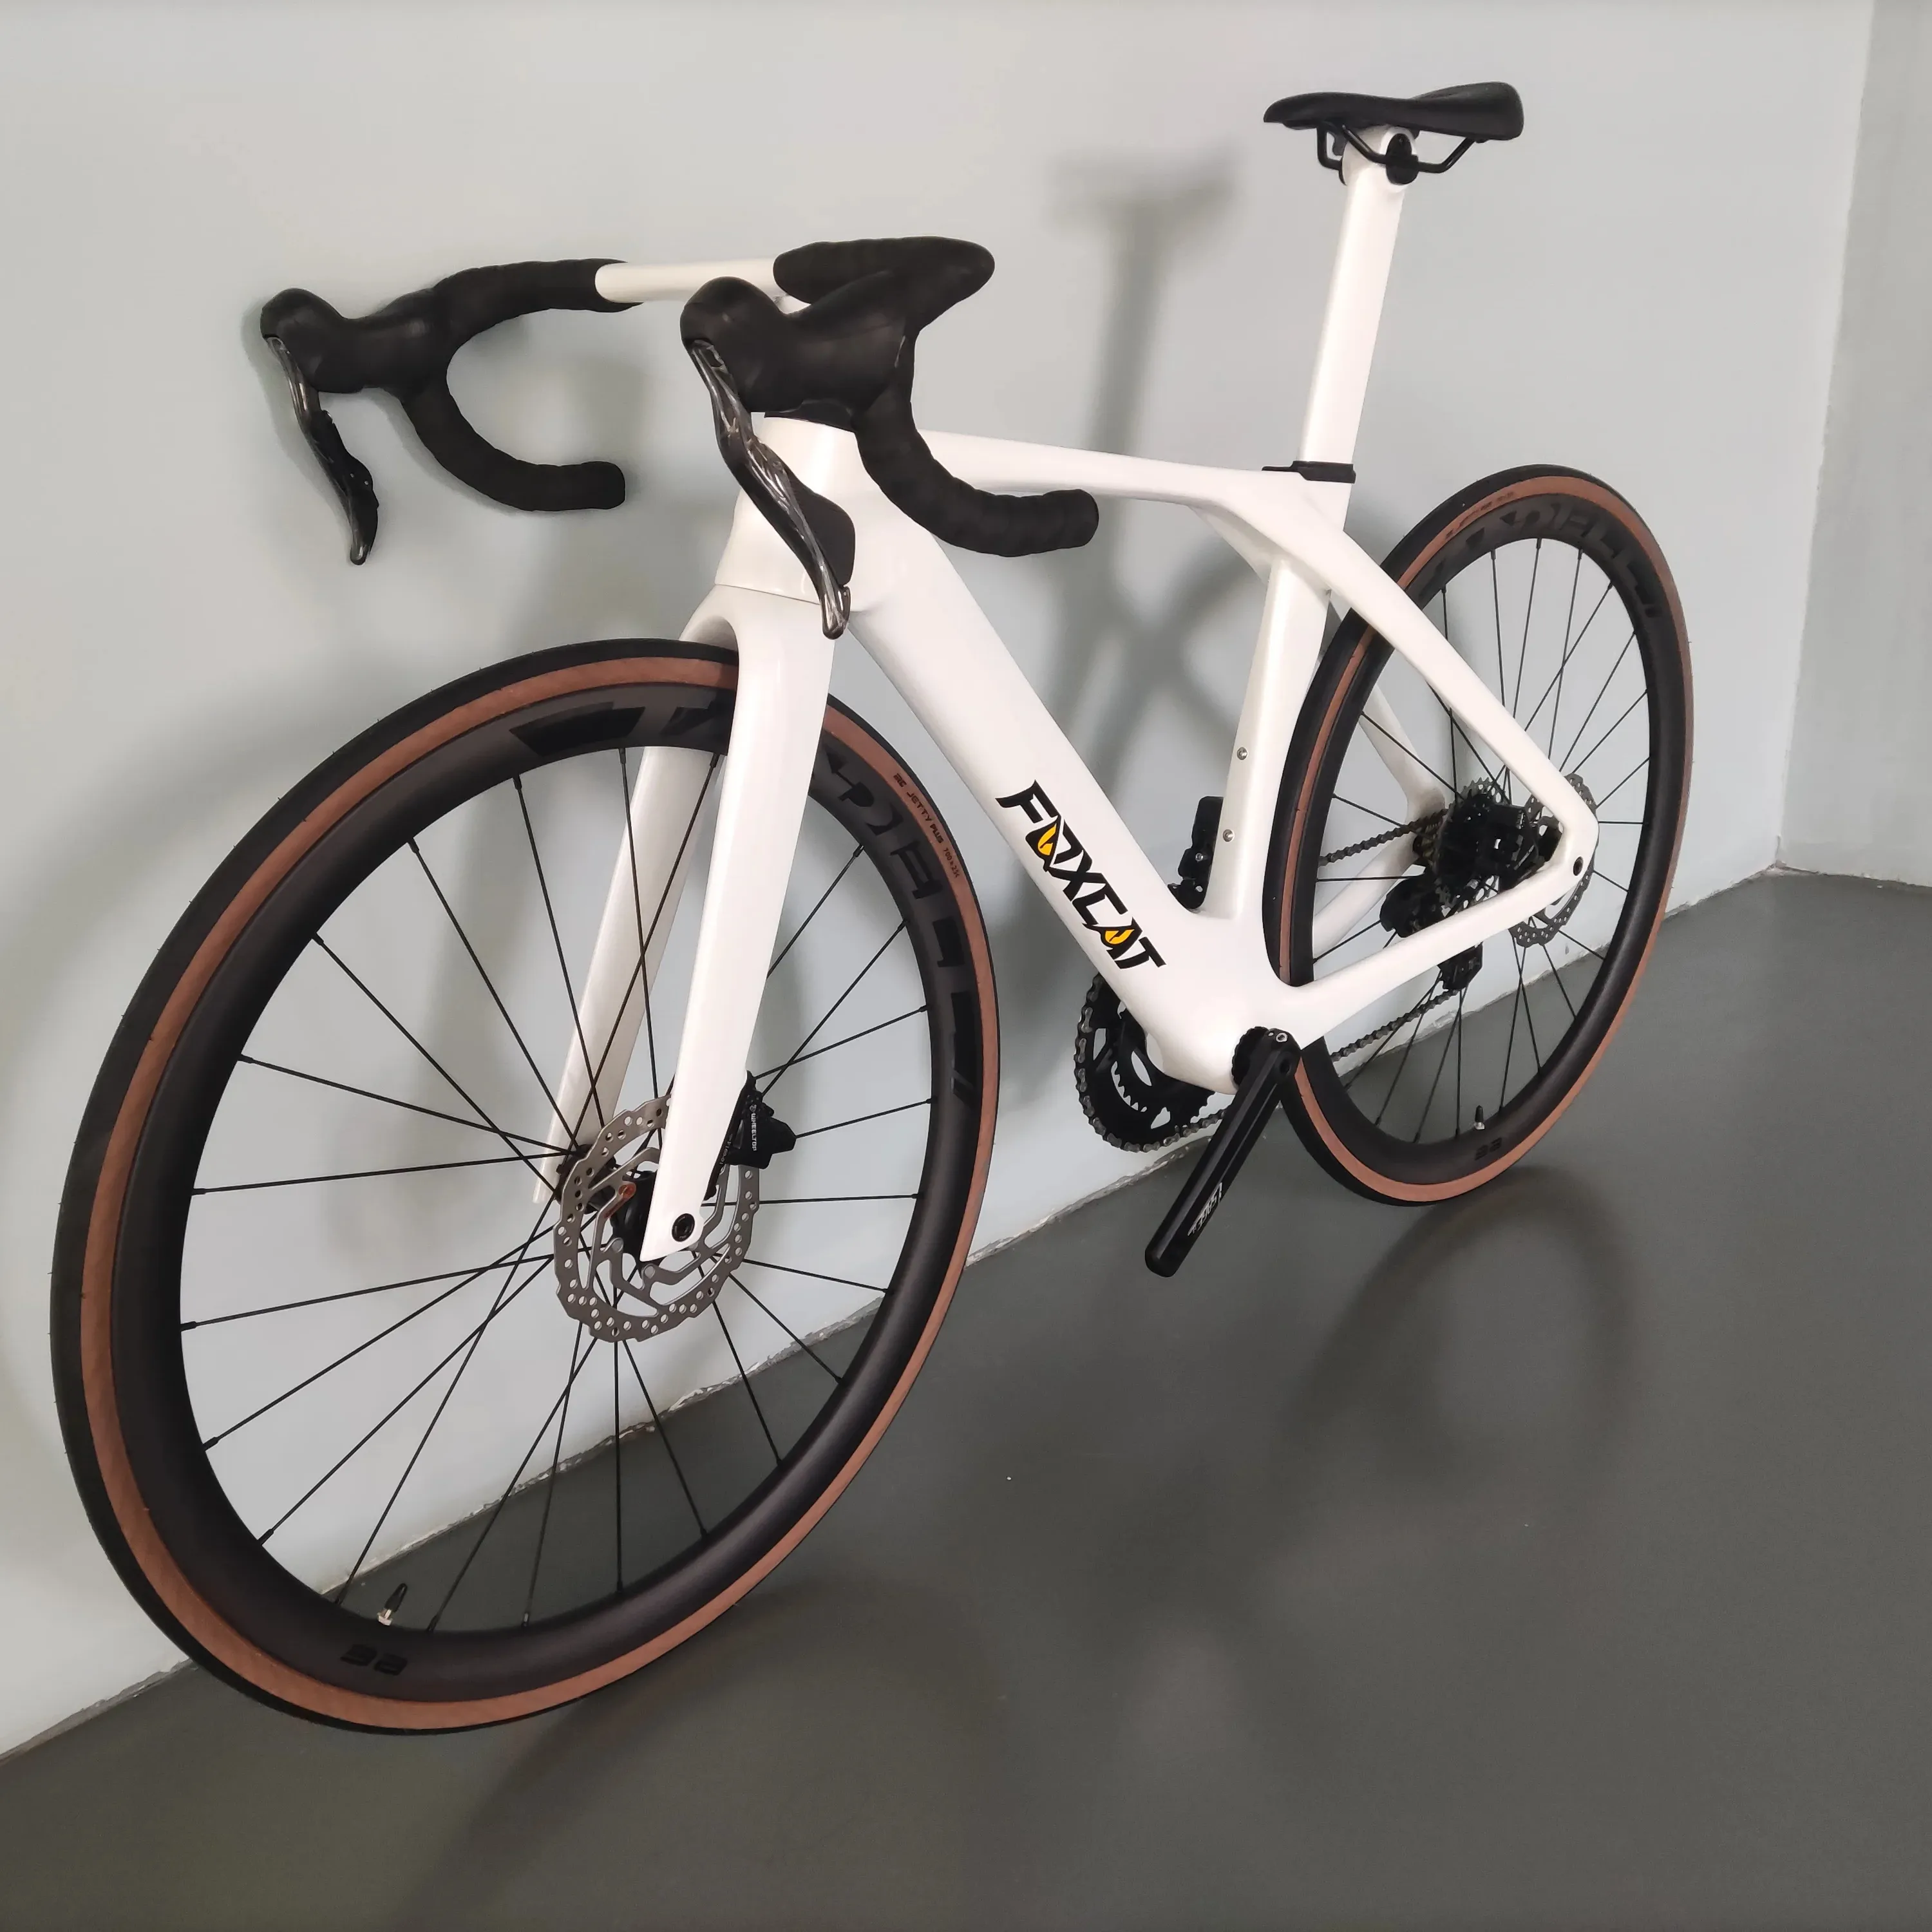 T800 Carbon Fiber Bicycle 700c Frameset 22 Speed Racing Carbon Fiber Complete Road Bike